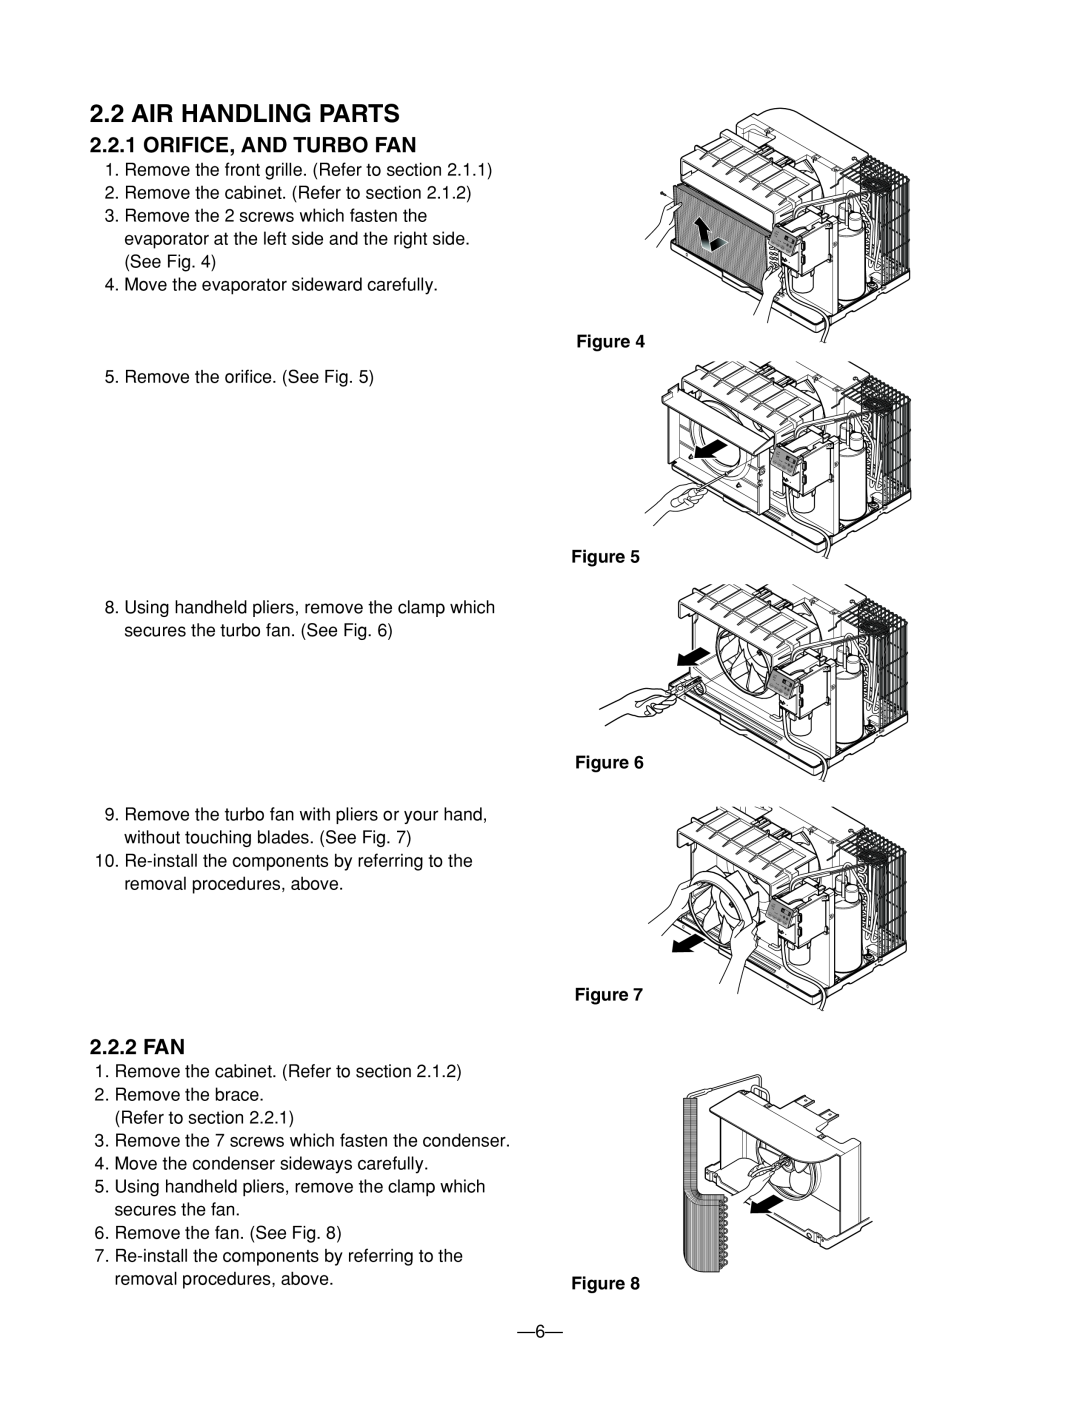 Heat Controller BG-103A service manual Air Handling Parts, Orifice, And Turbo Fan, 2.2.2 FAN 